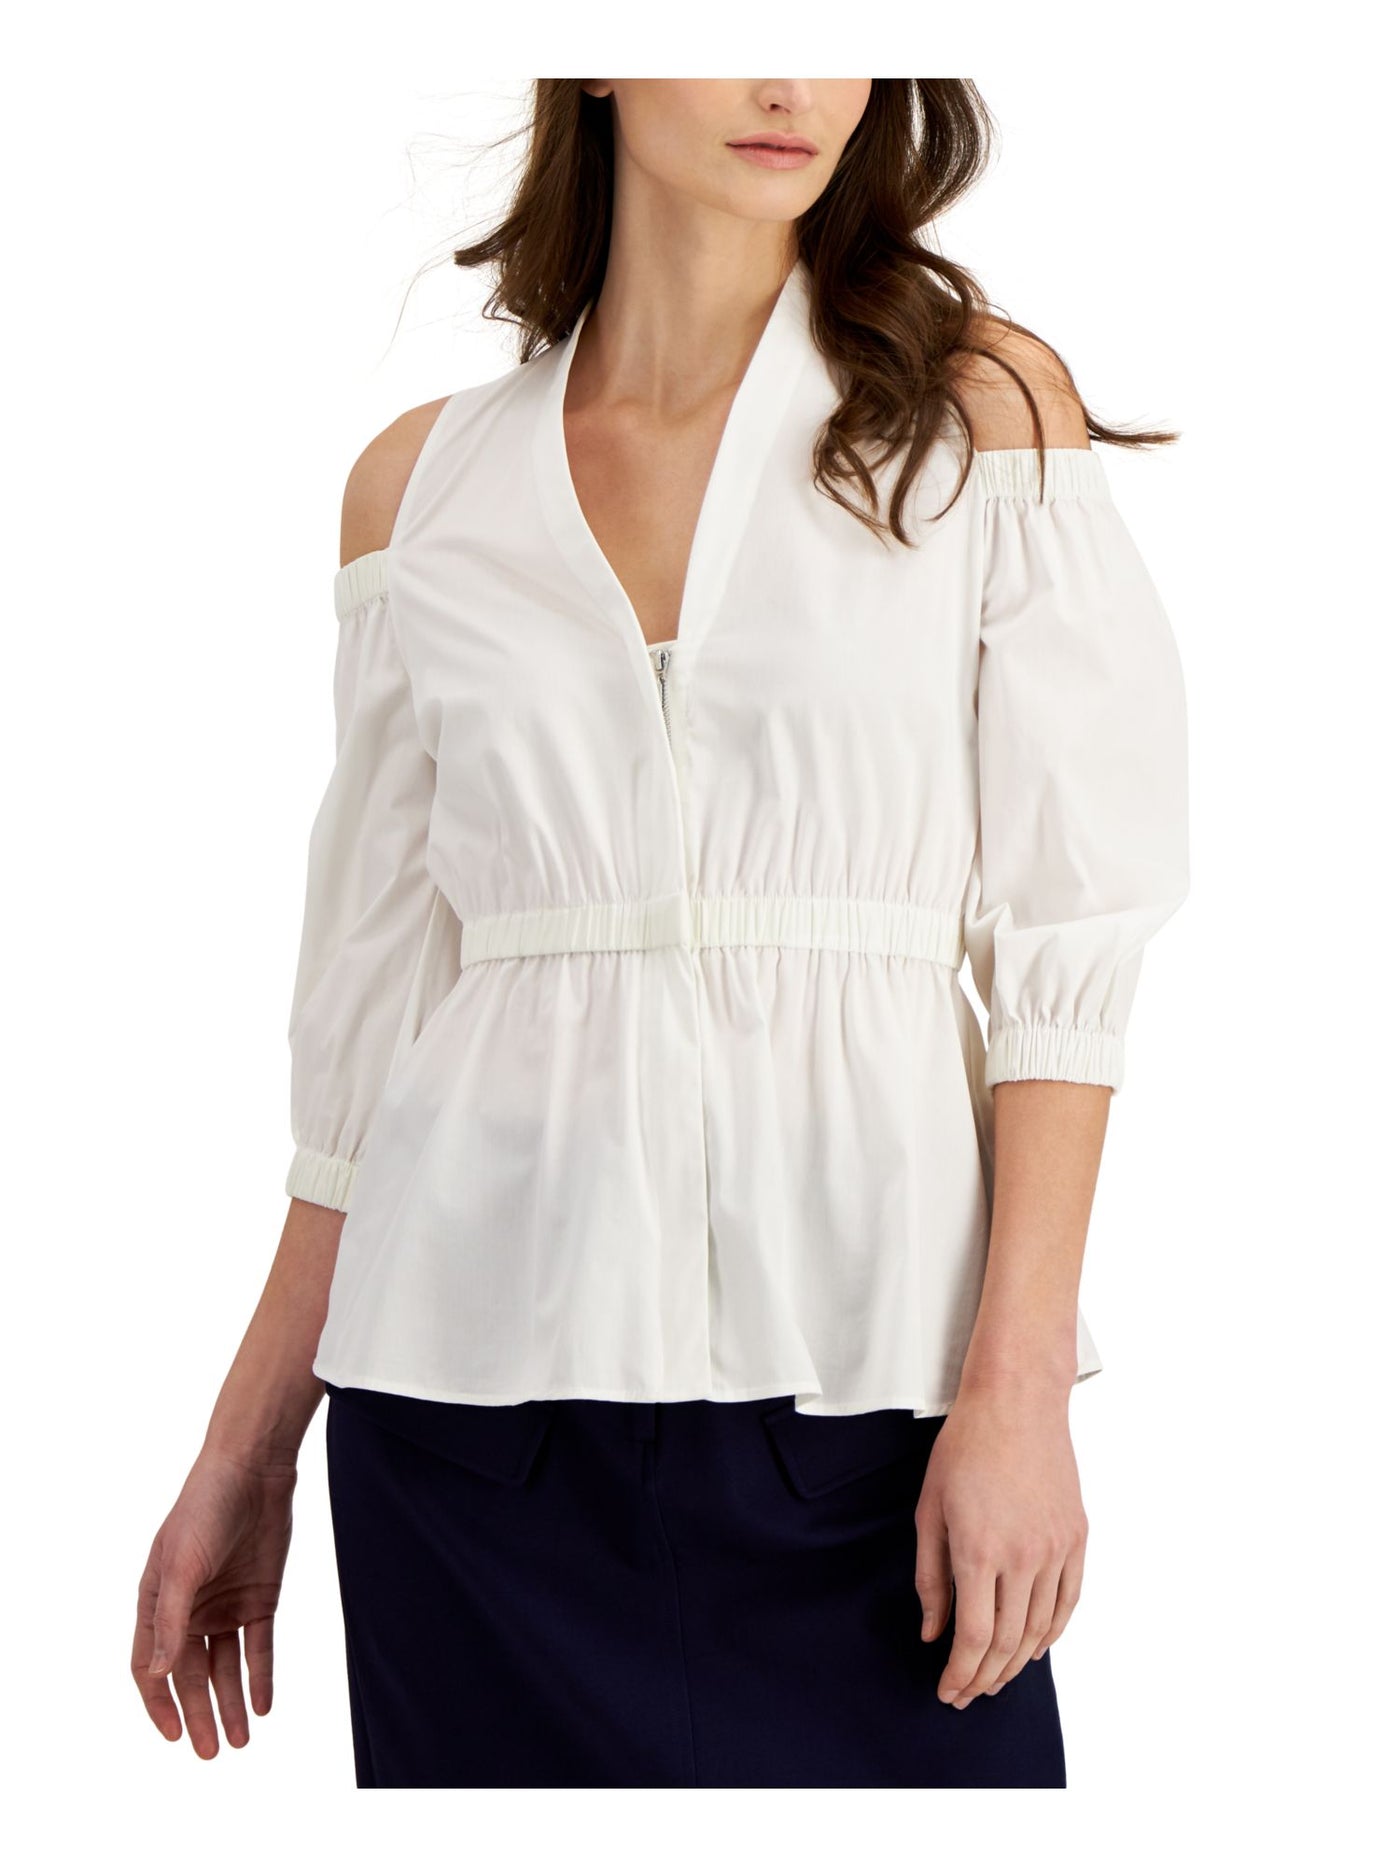 DONNA KARAN Womens White Cold Shoulder Sheer Unlined Pullover 3/4 Sleeve V Neck Peplum Top M